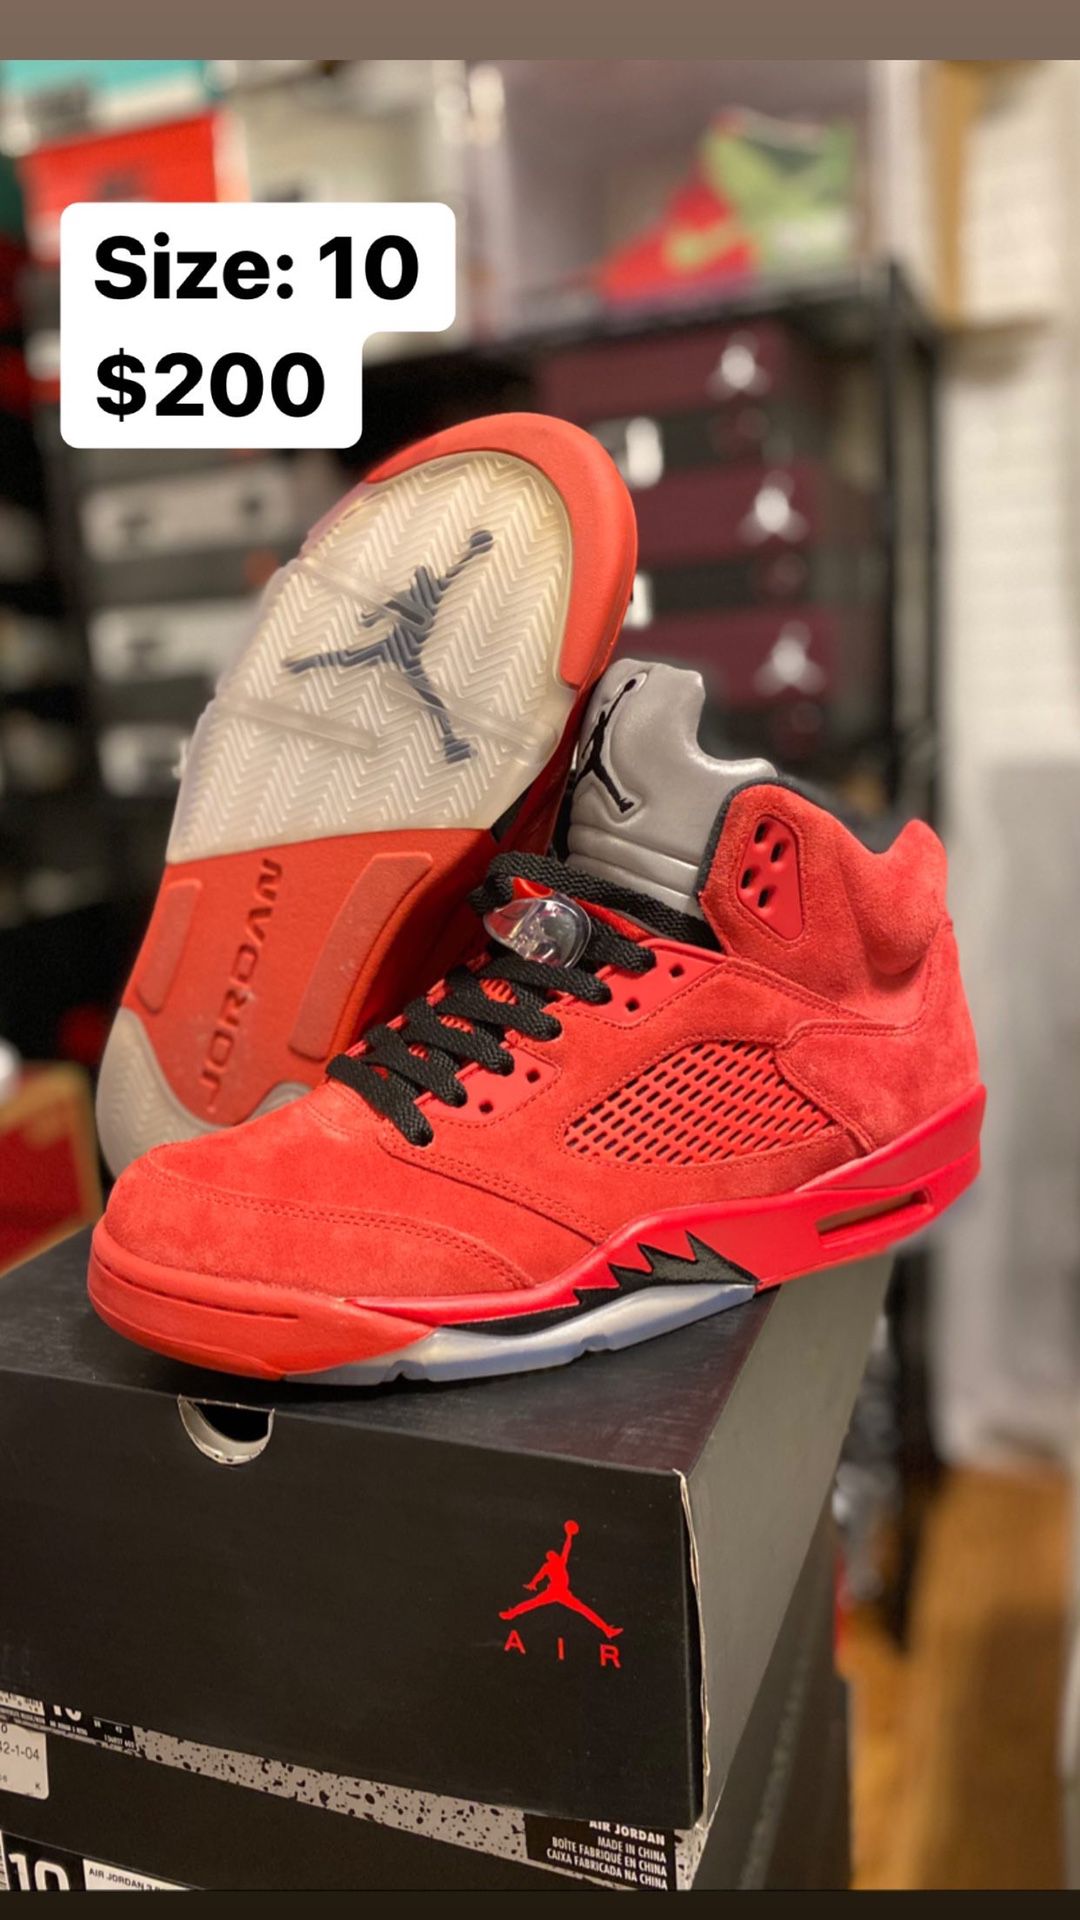 Jordan 5 Retro Red Suade Size 10